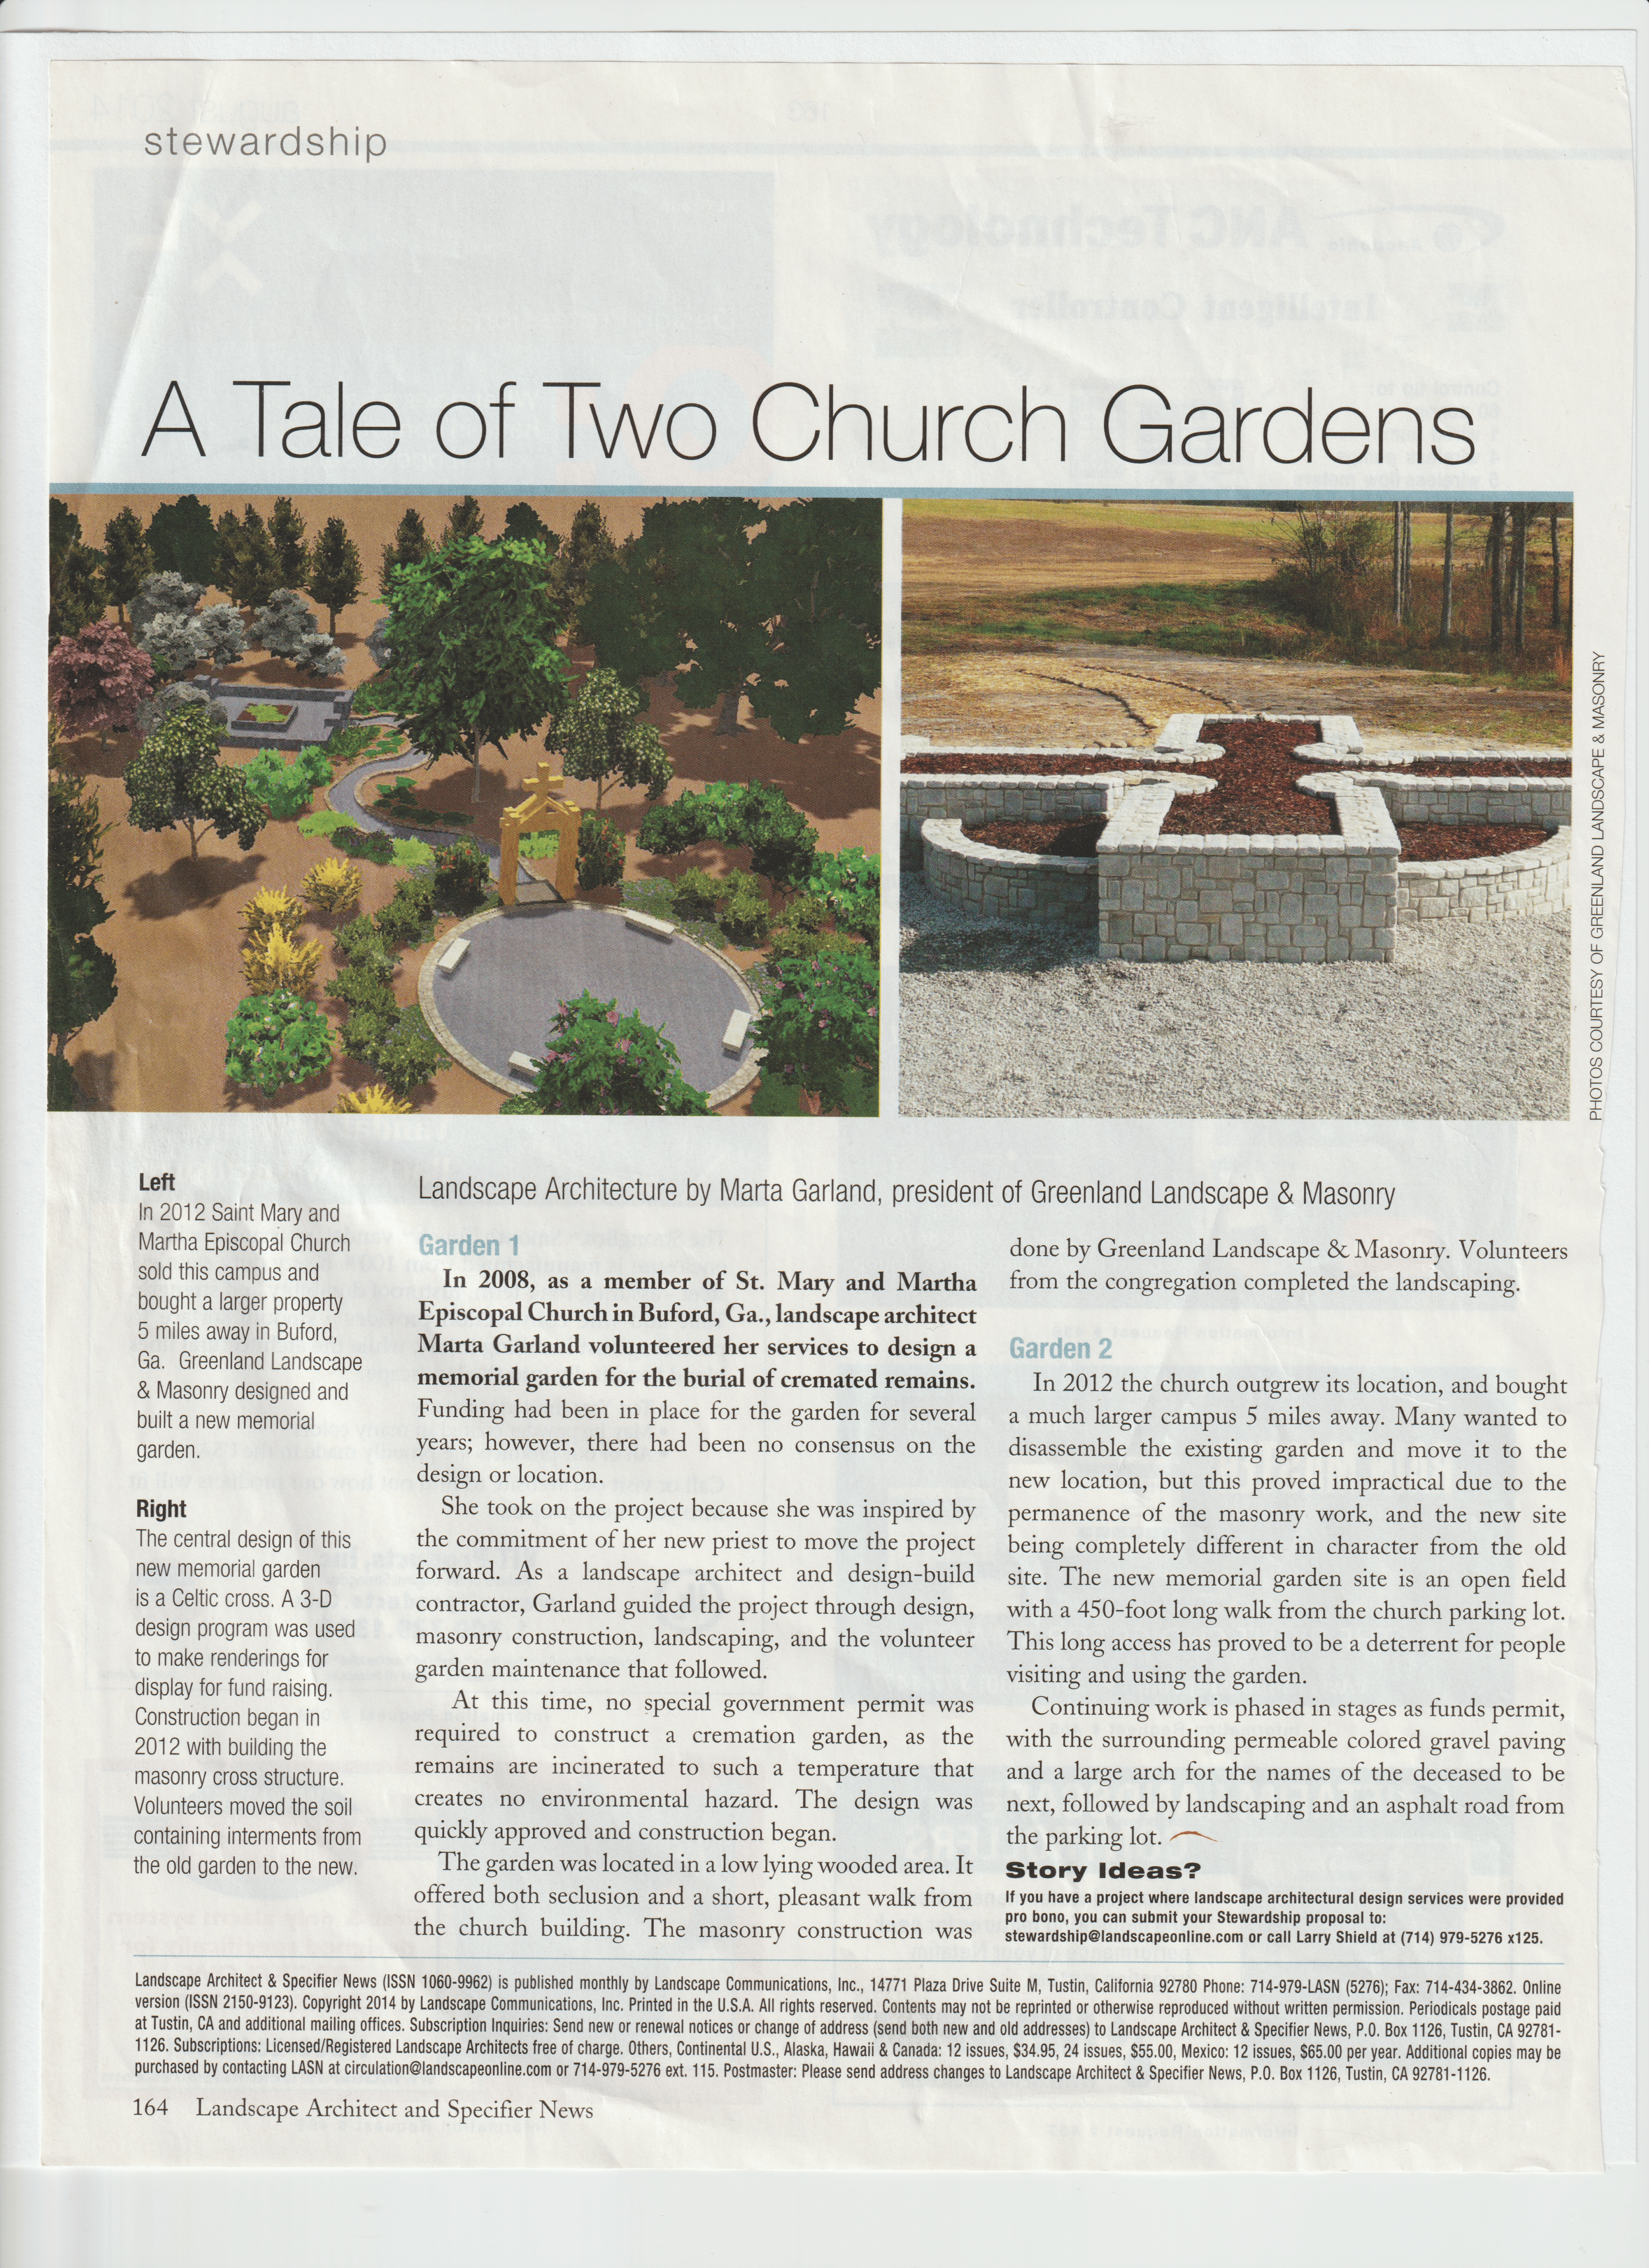 Church garden magazine article